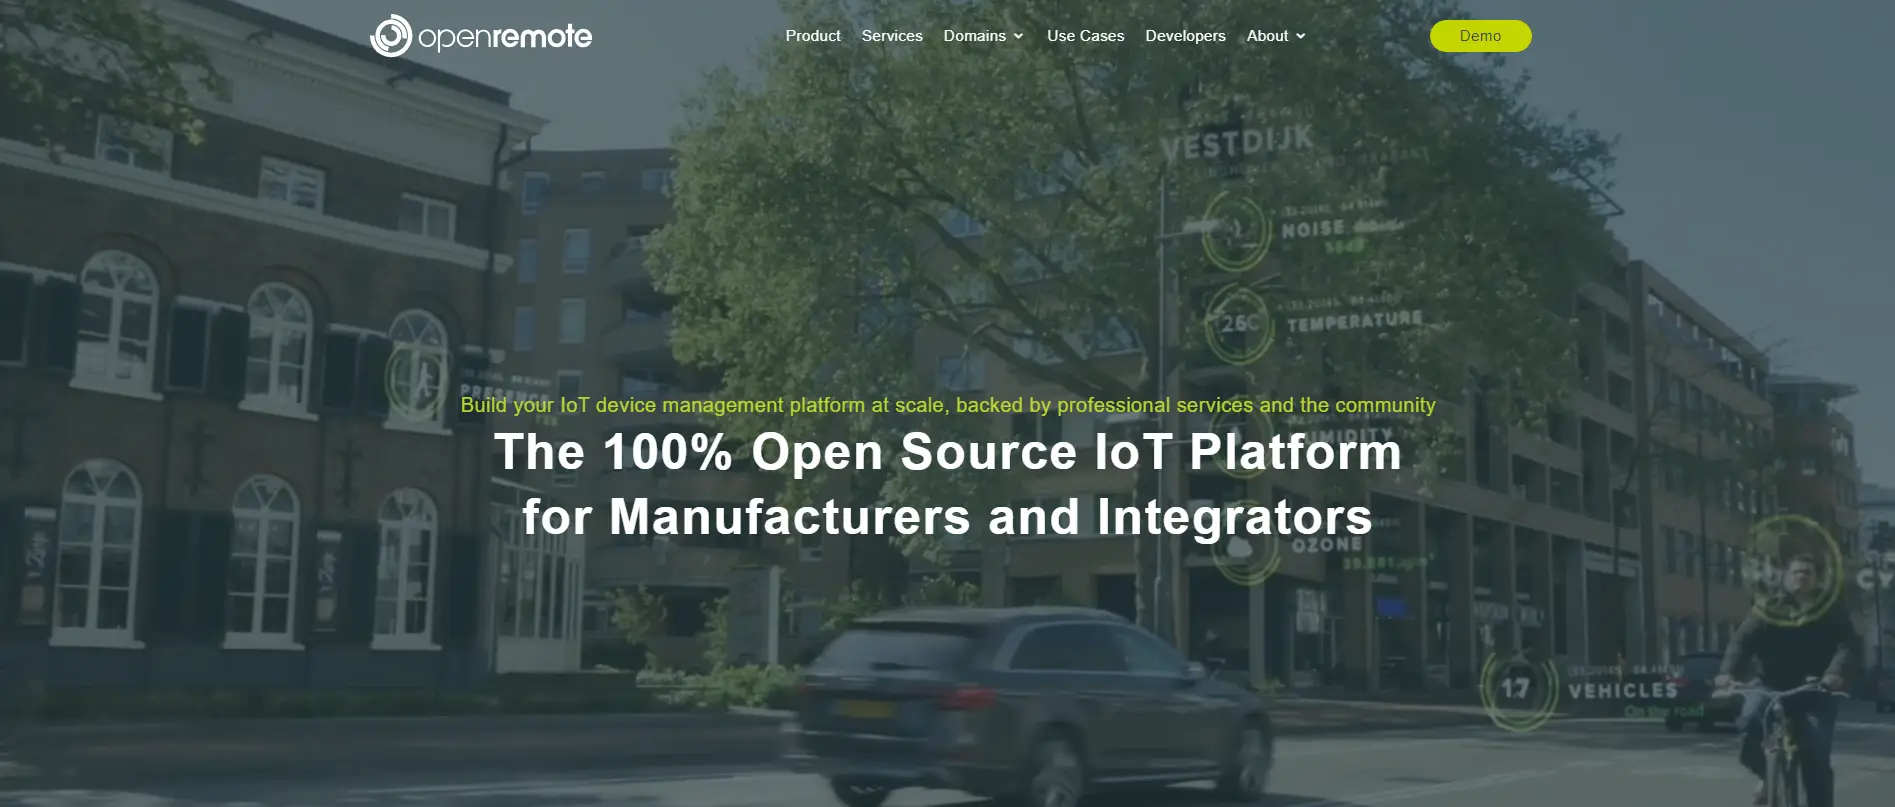 OpenRemote free IoT platform